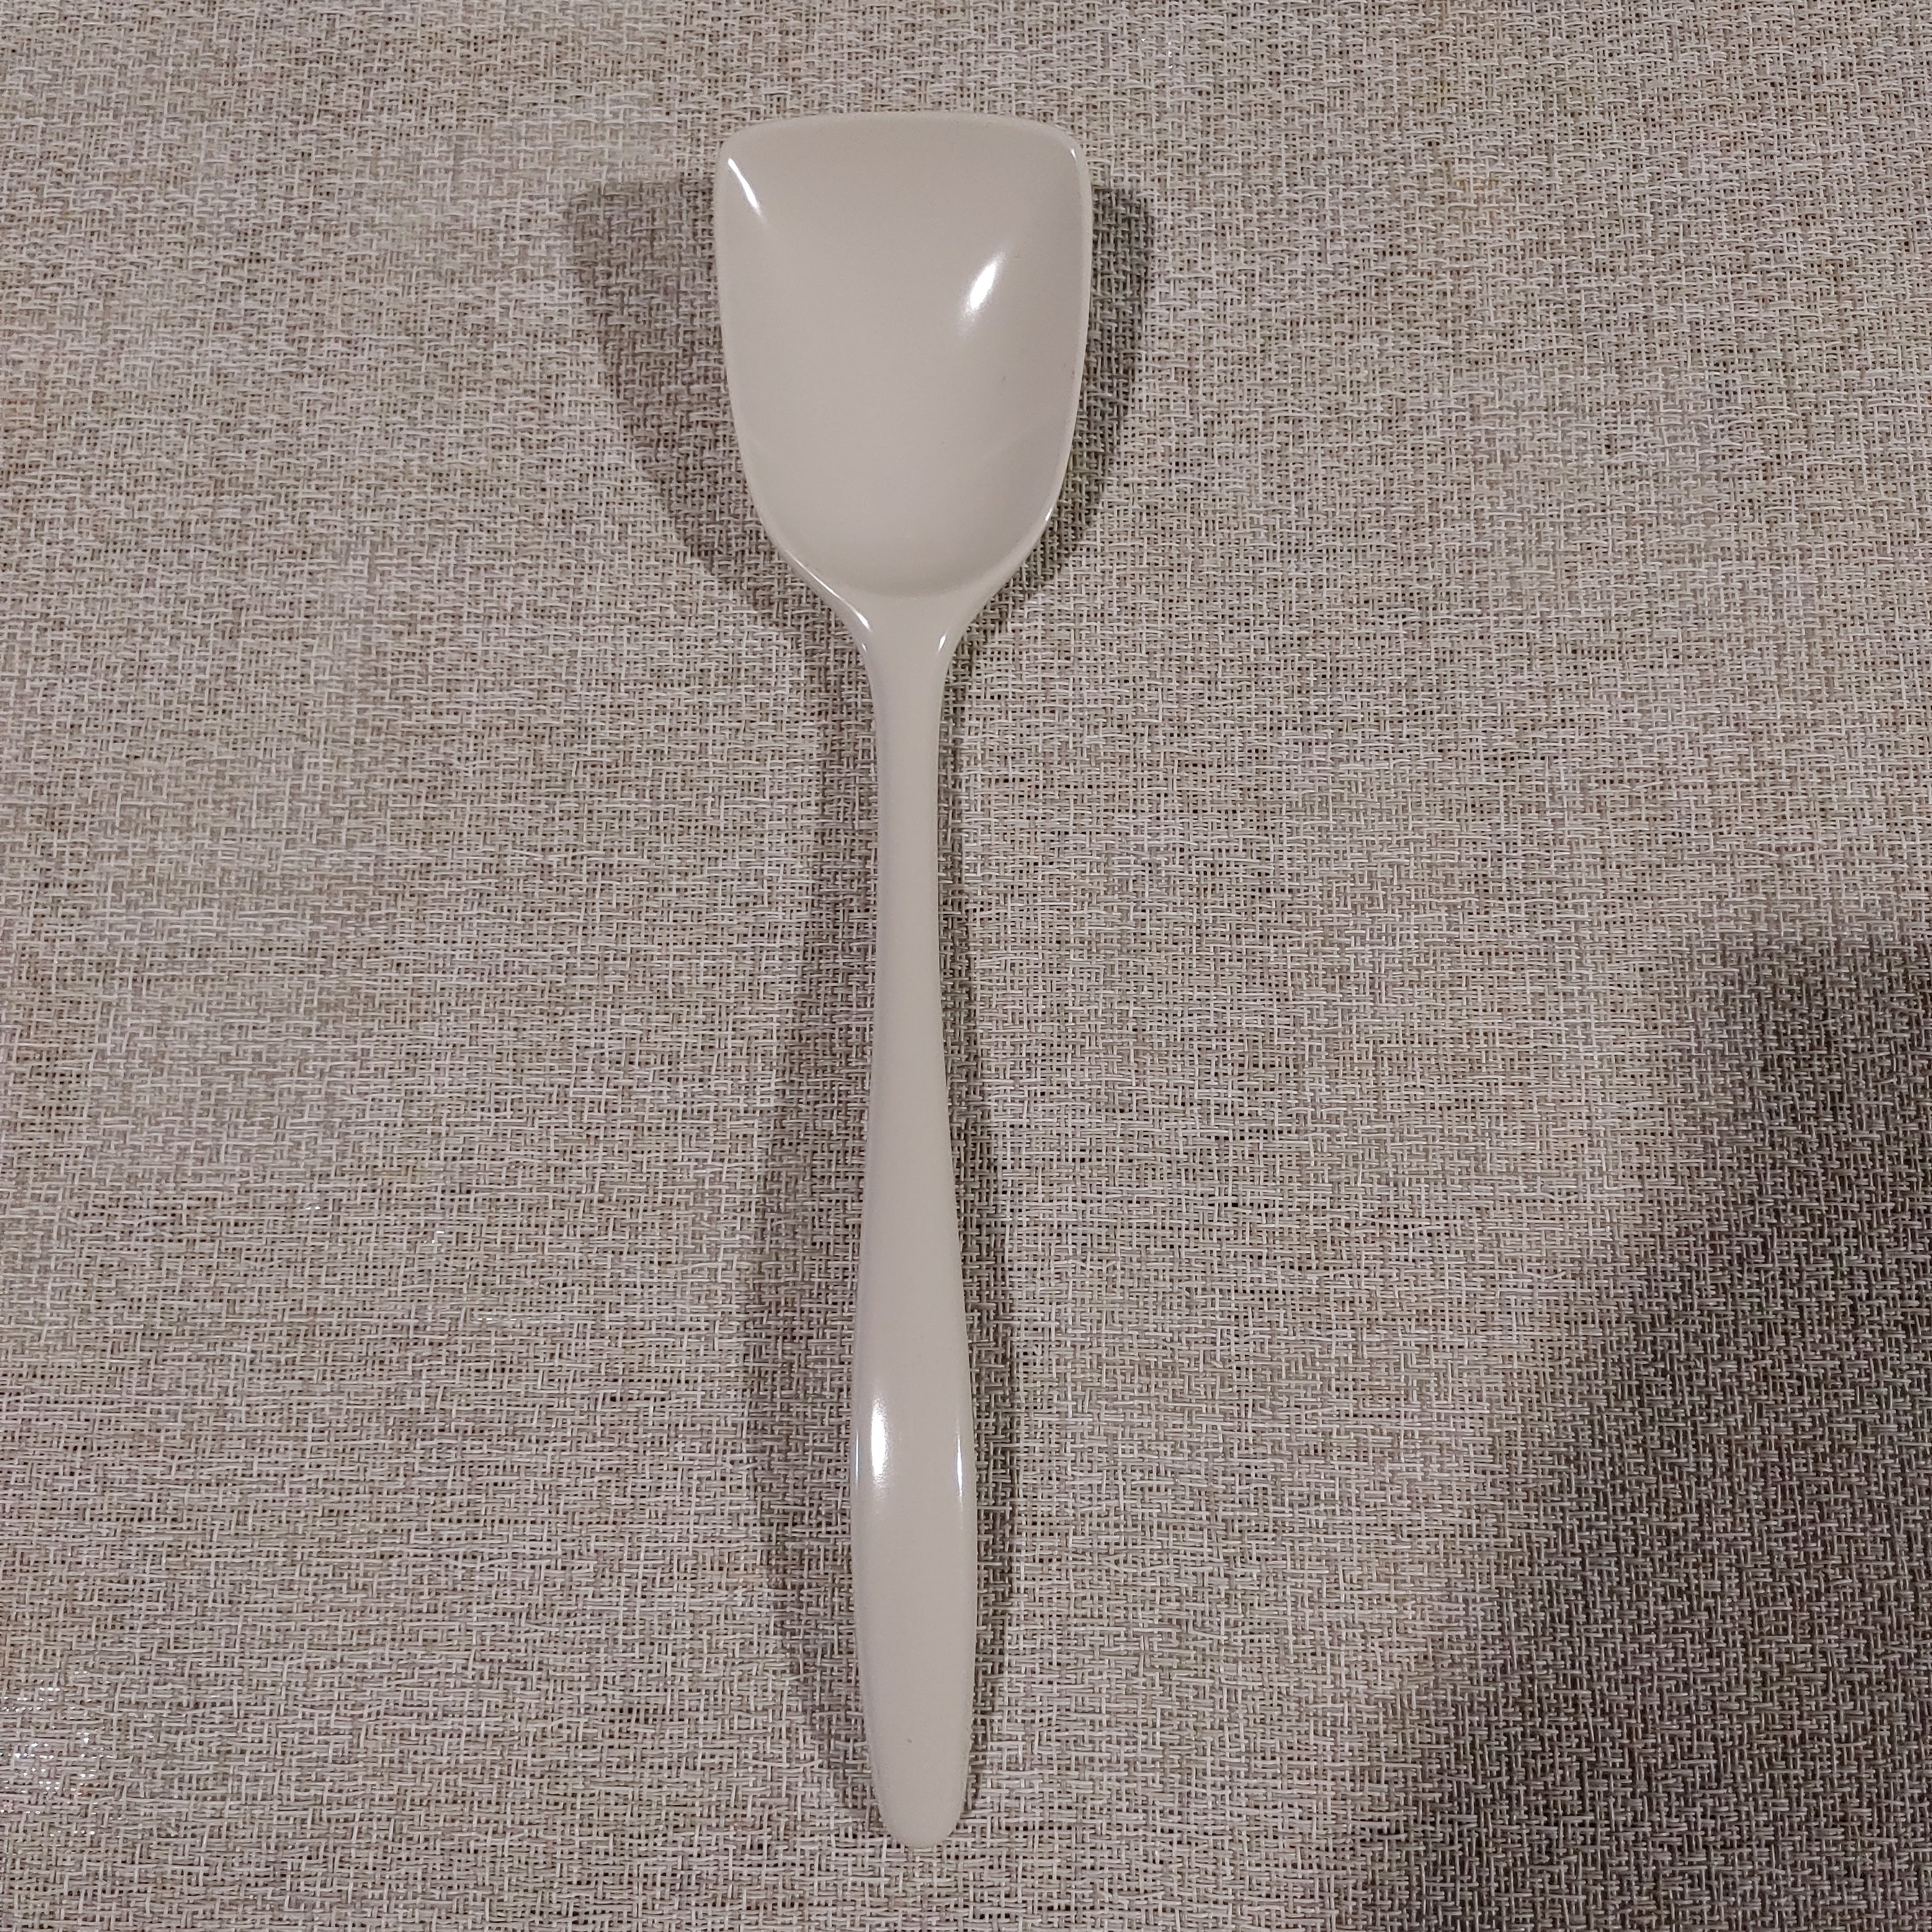 Scoop Spoon 27cm/10.5"